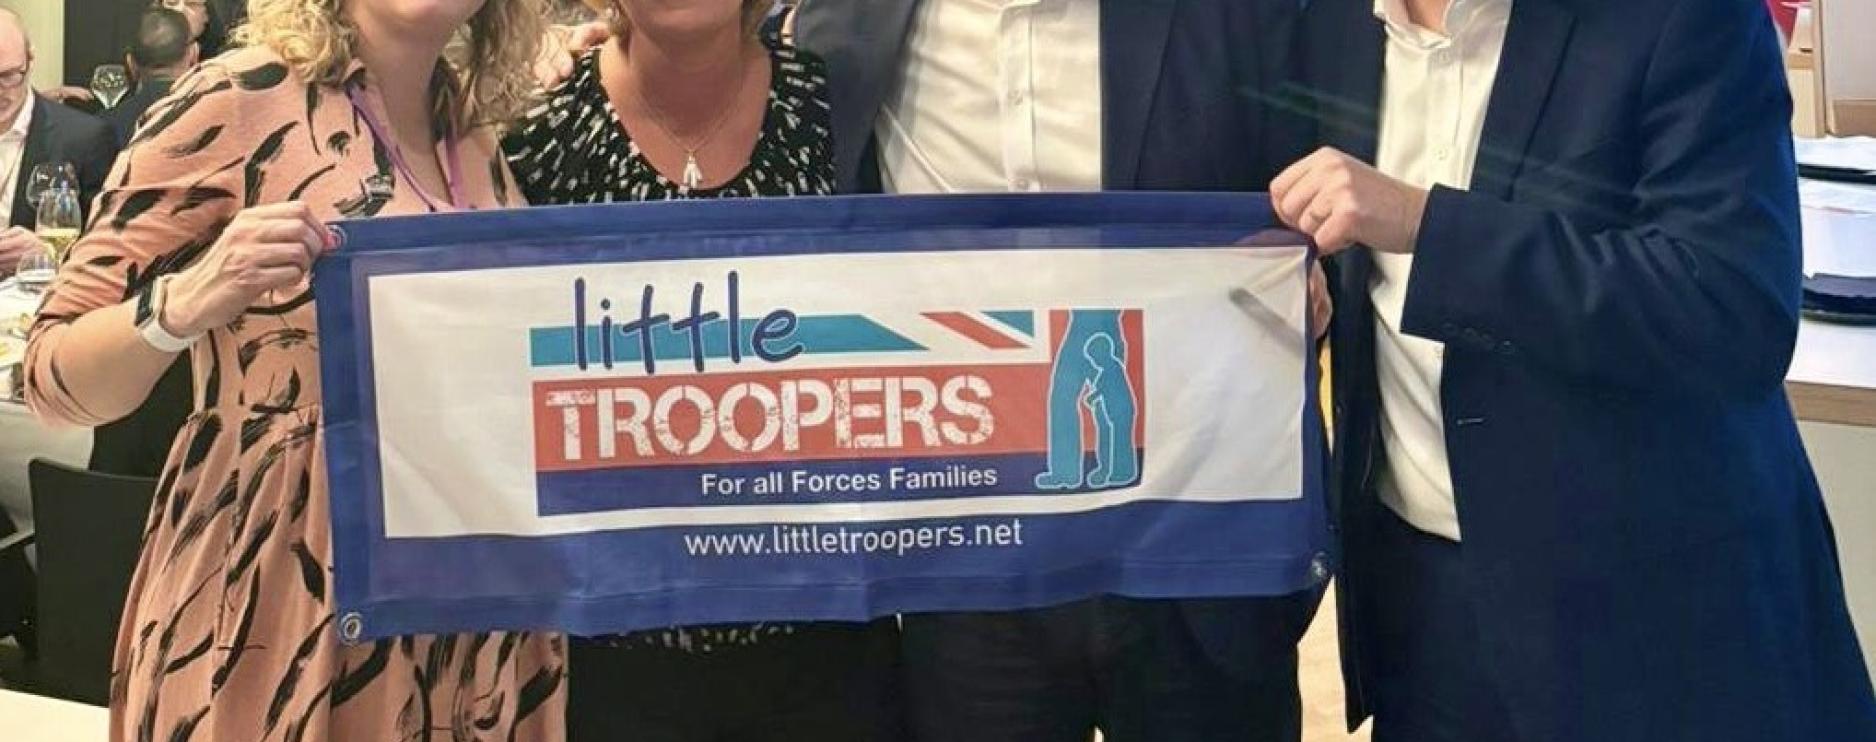 BM Caterers raises £7,500 for Little Troopers through supplier meet & greet 